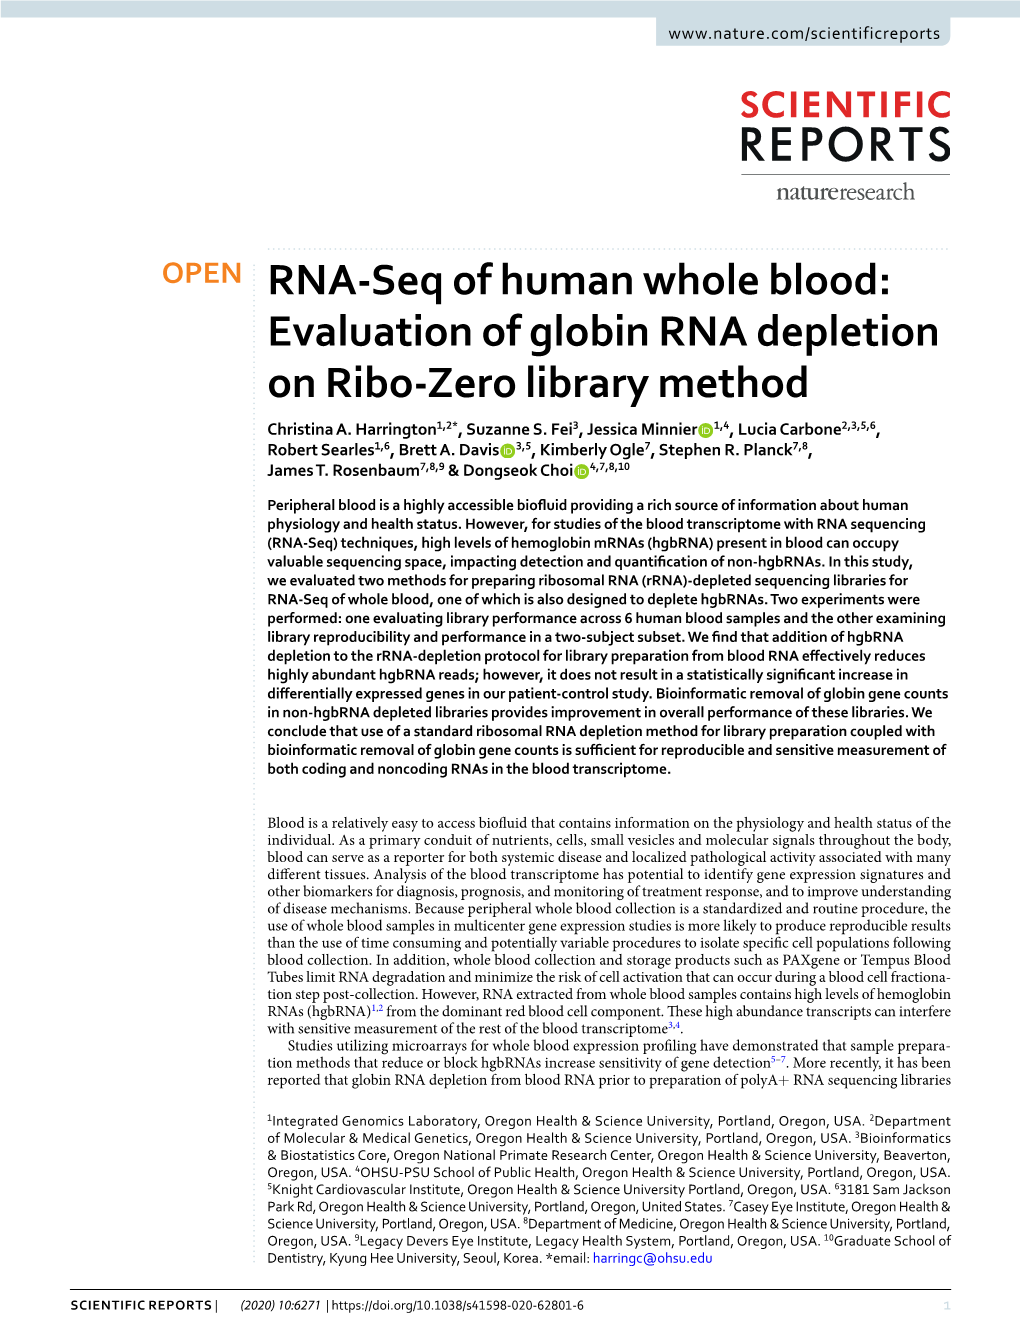 Evaluation of Globin RNA Depletion on Ribo-Zero Library Method Christina A